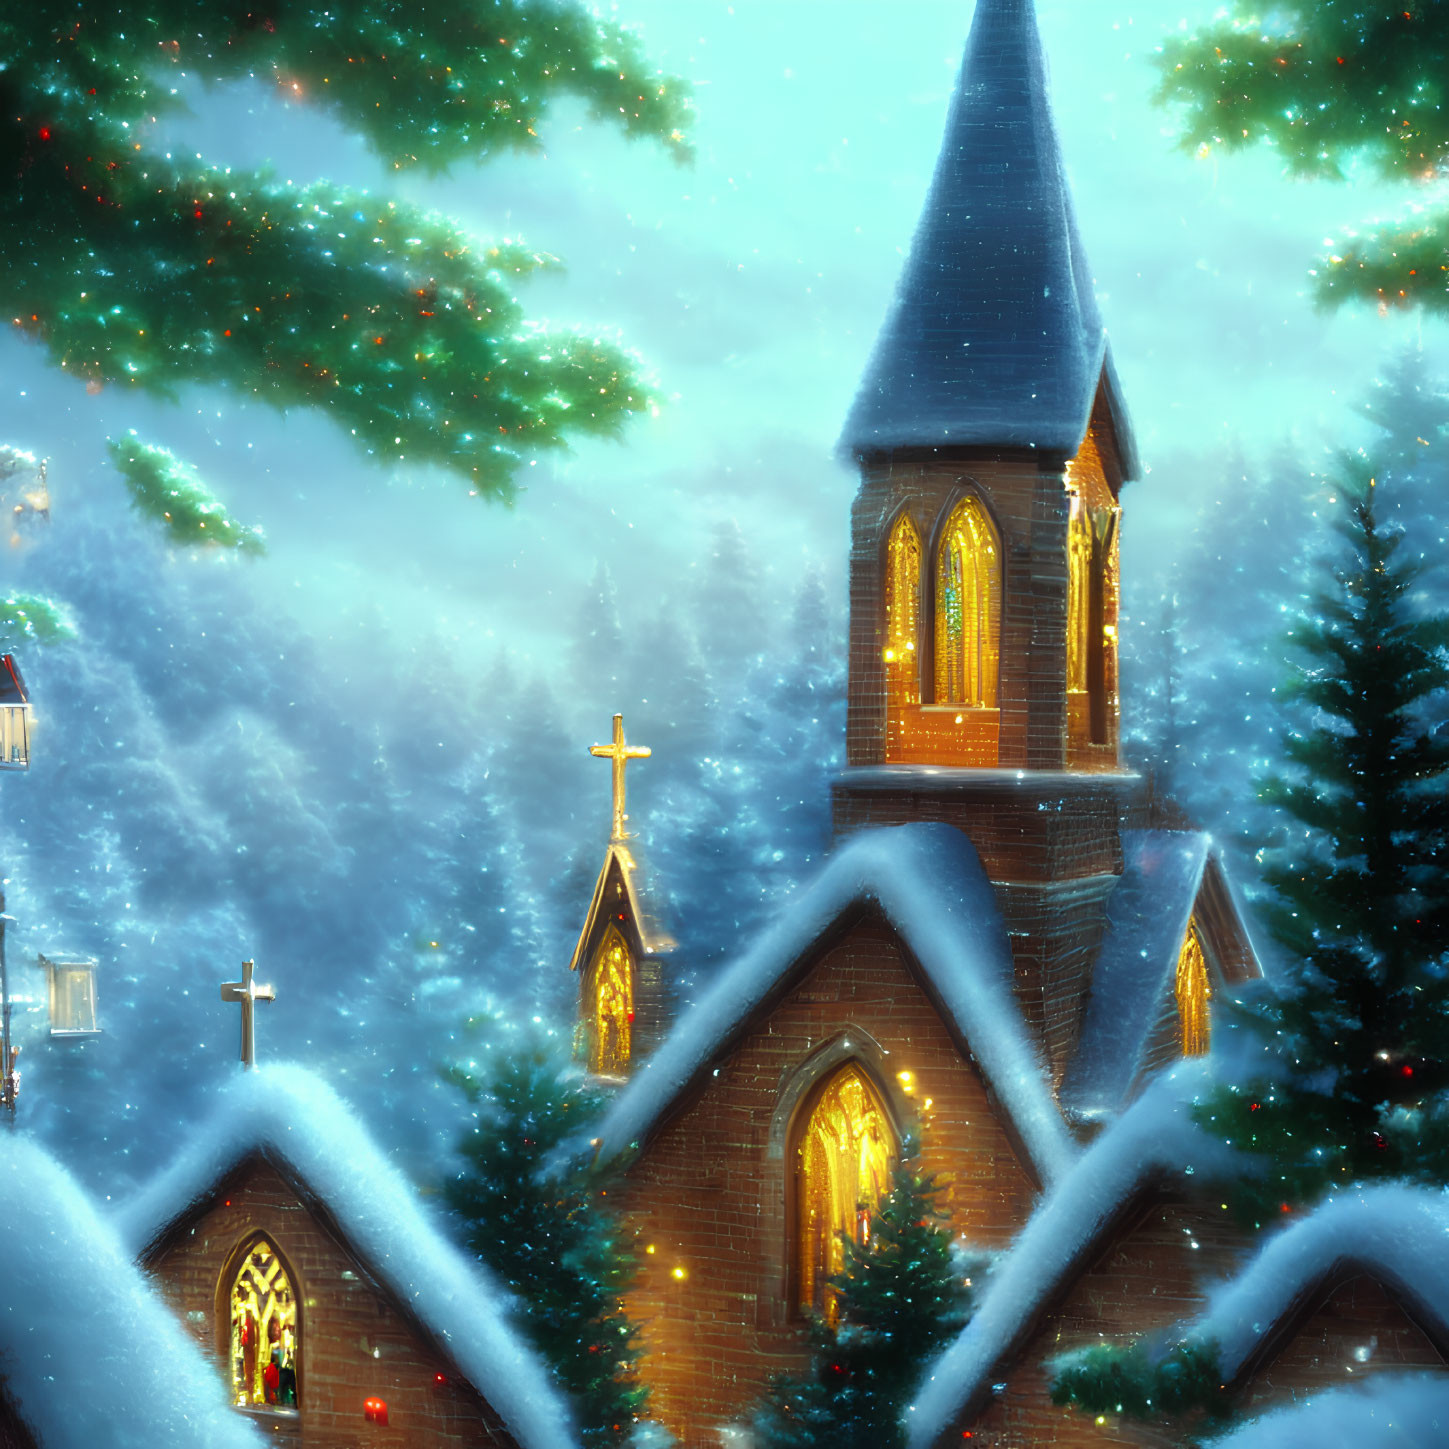 Snow-covered church in pine forest under starry sky: serene winter scene